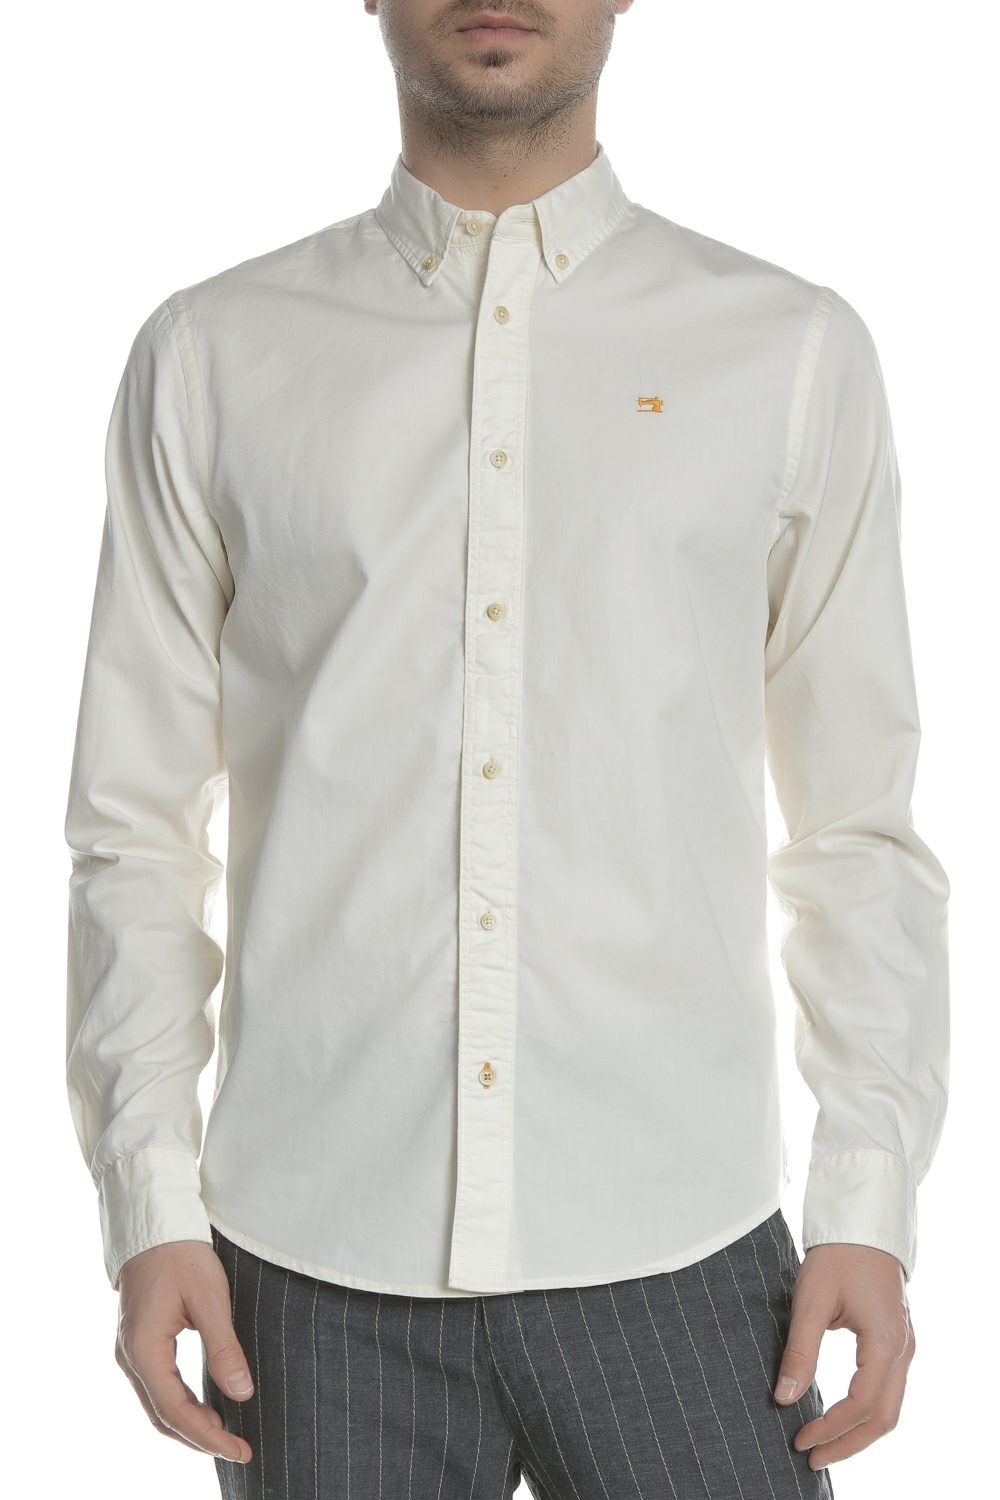 SCOTCH & SODA - Ανδρικό μακρυμάνικο πουκάμισο Scotch & Soda λευκό Ανδρικά/Ρούχα/Πουκάμισα/Μακρυμάνικα